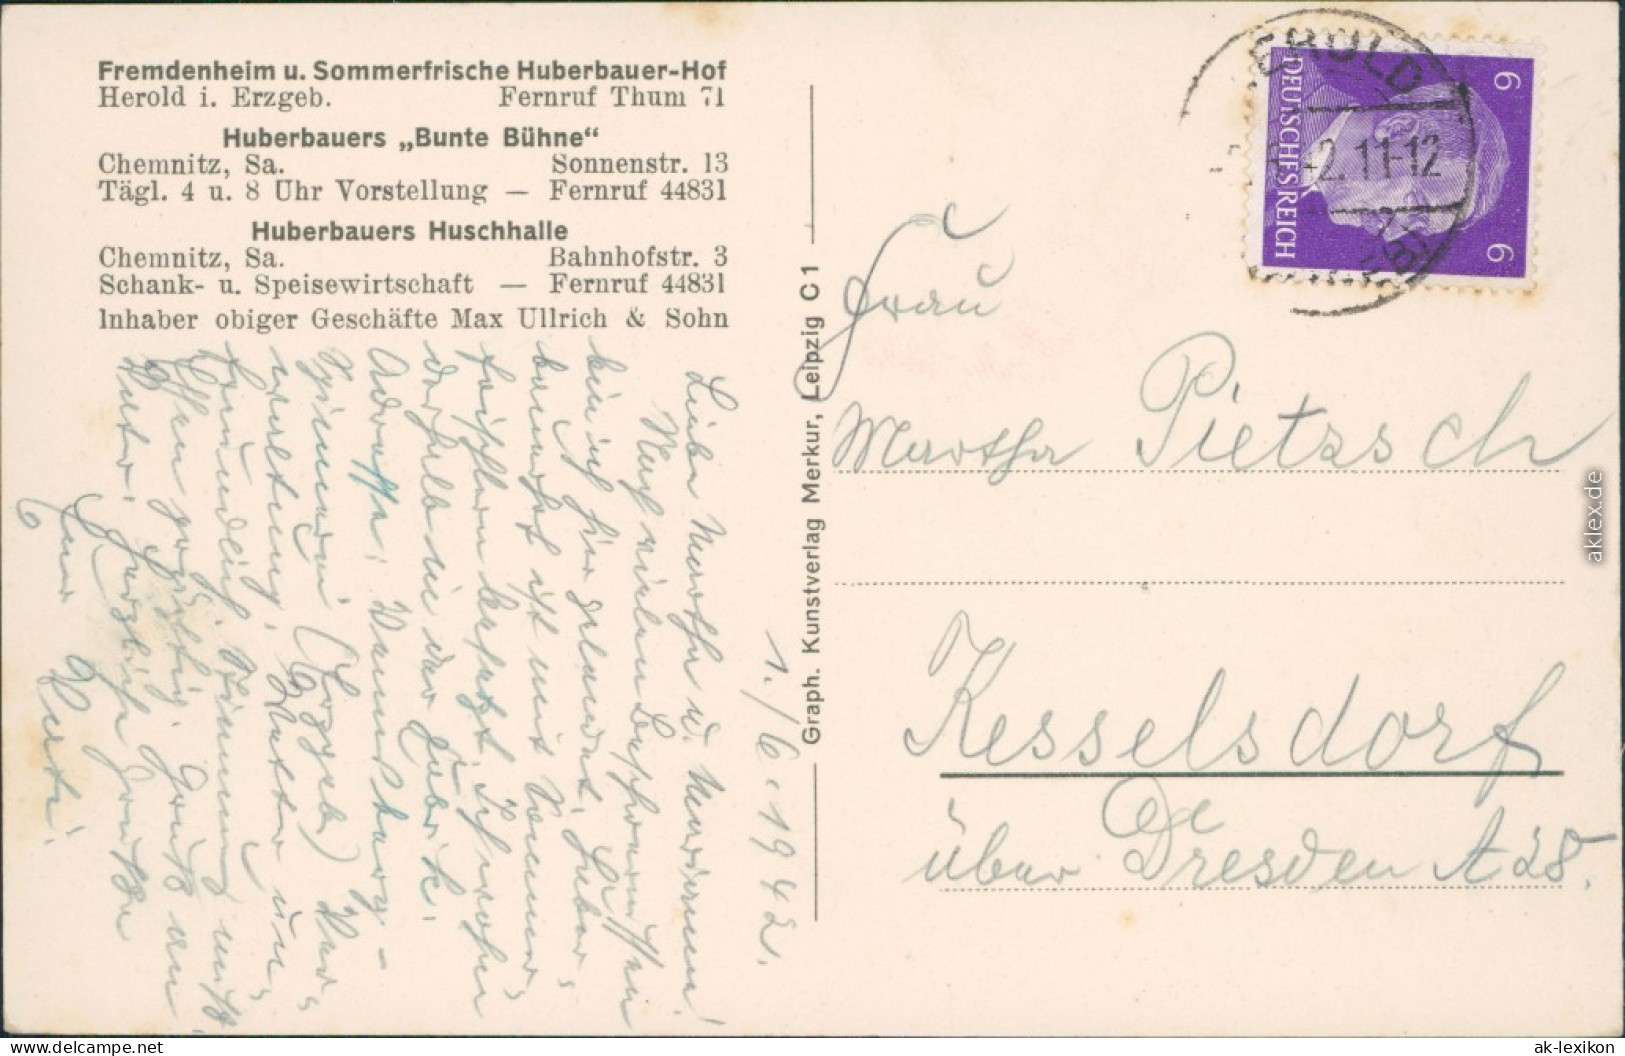 Herold -Thum Huberbauer Hof - Ratskeller Ansichtskarte Erzgebirge 1942 - Thum